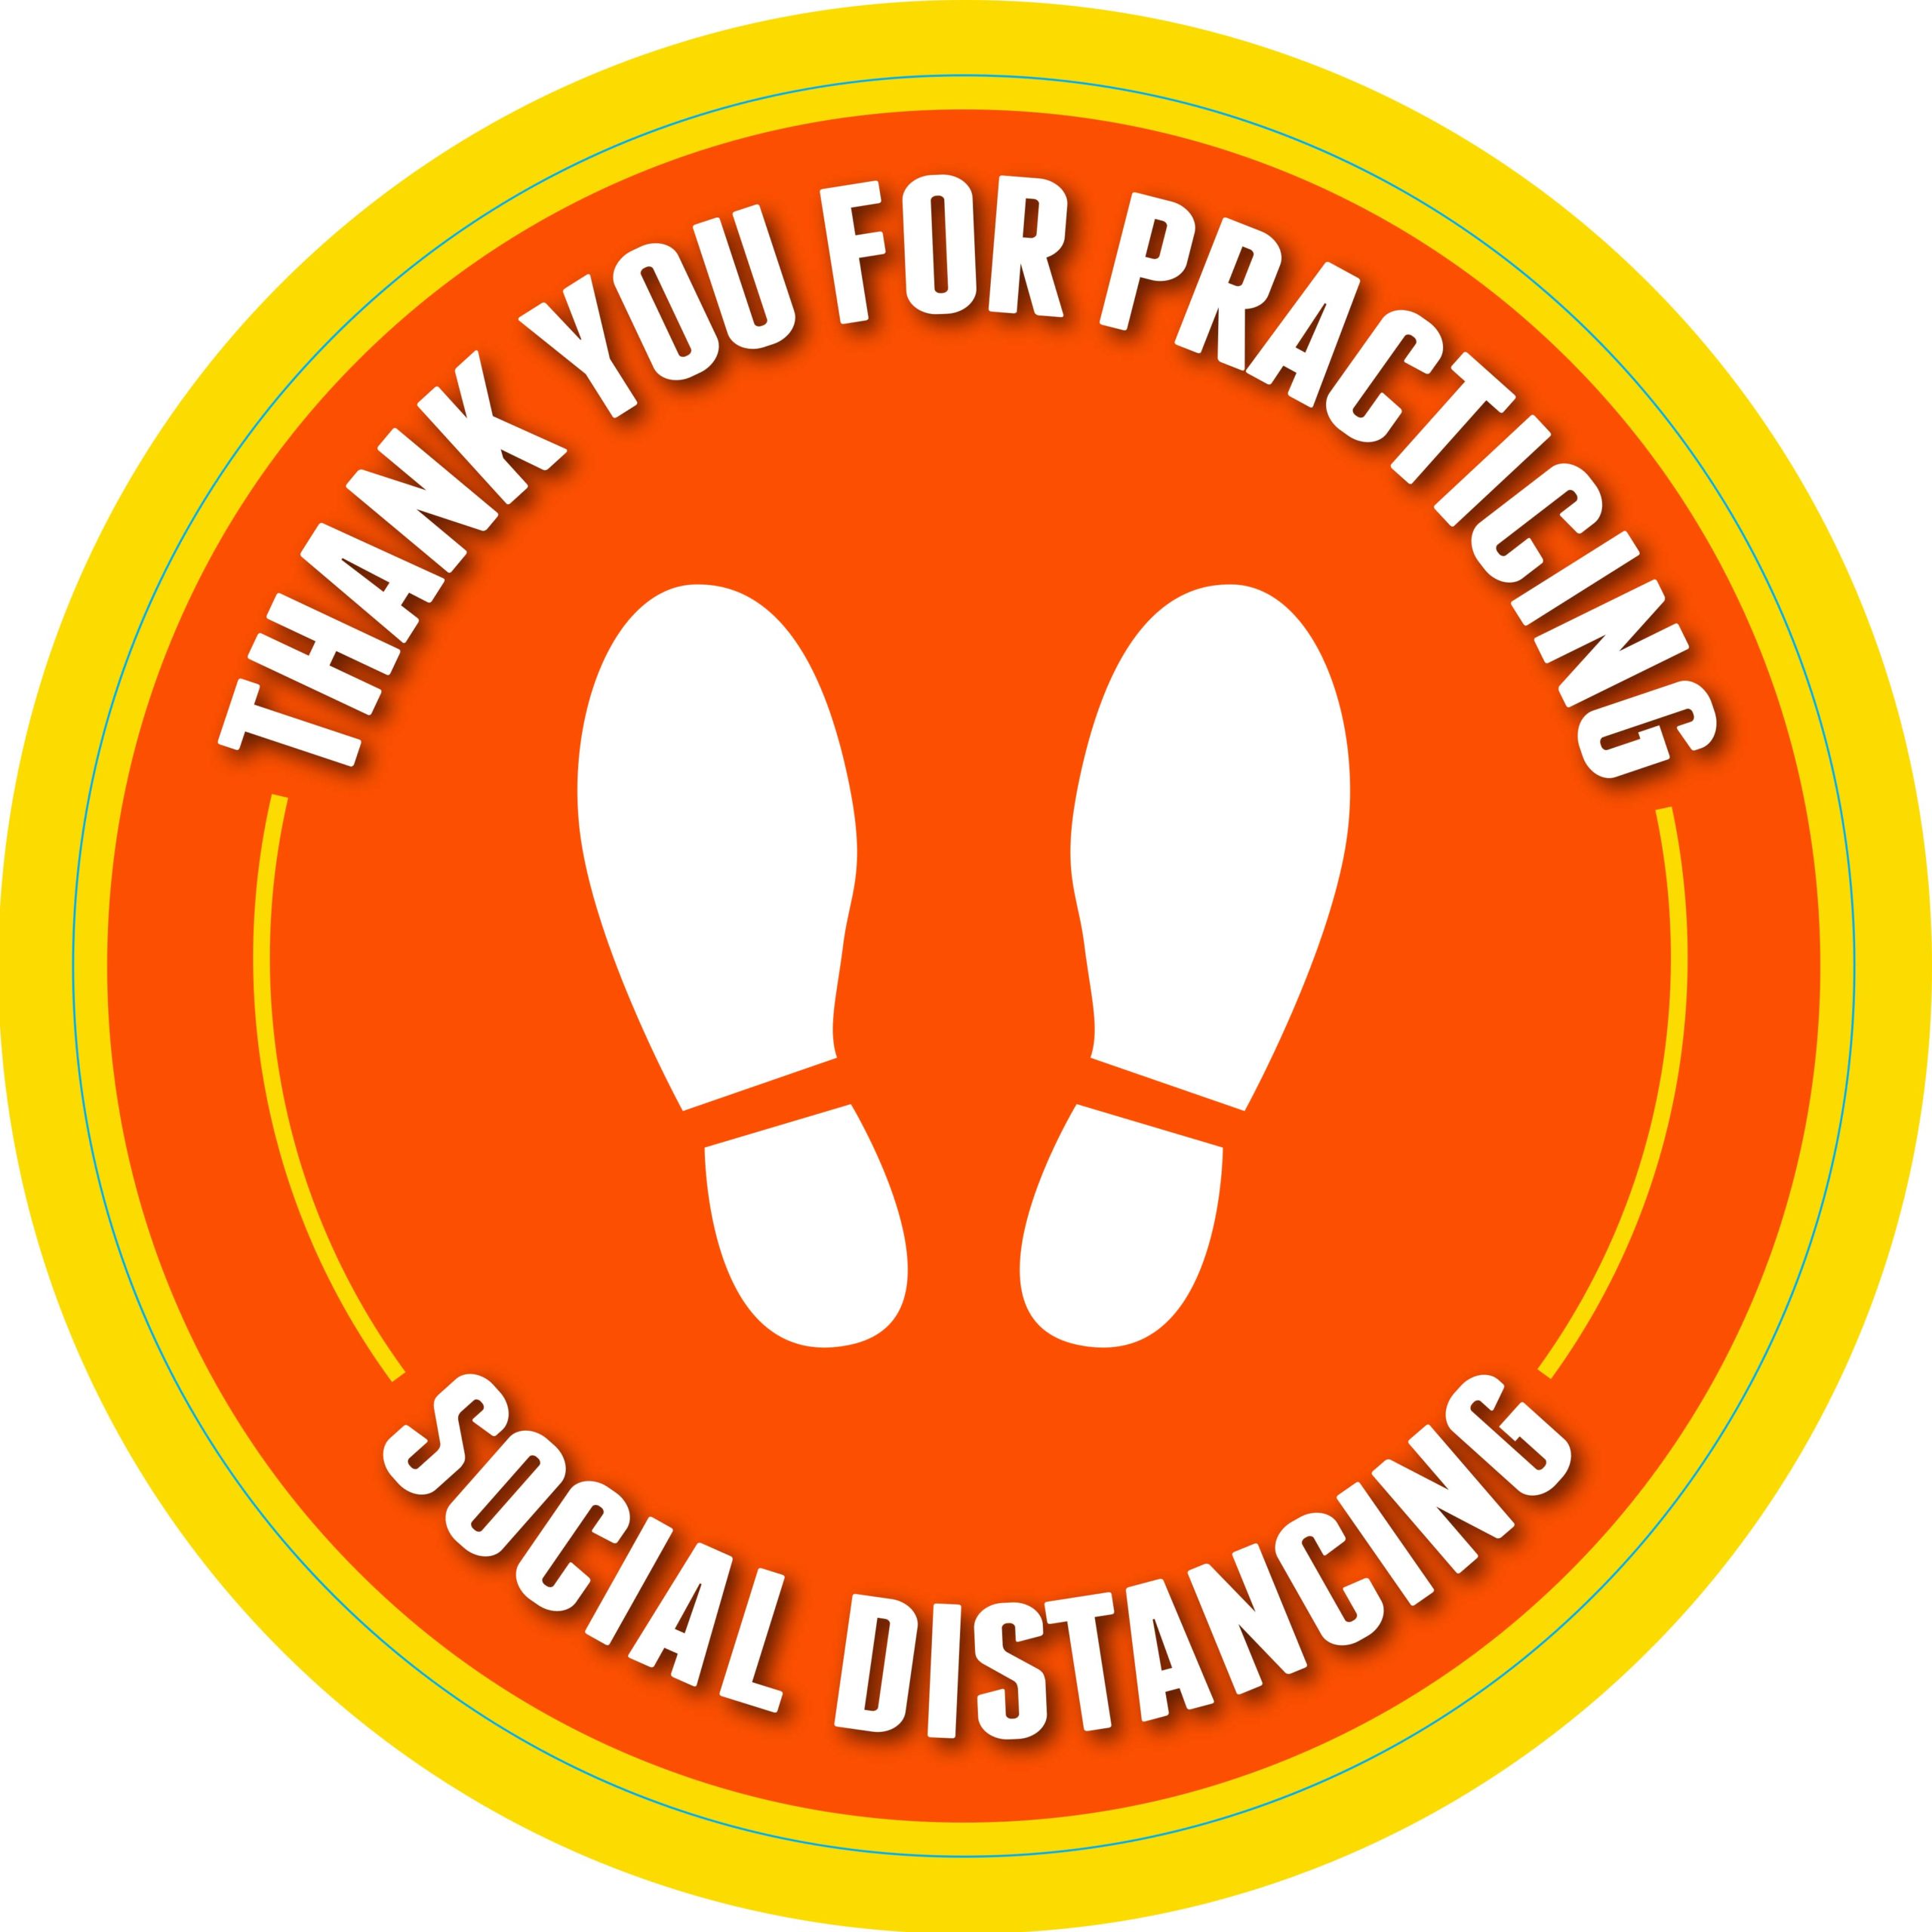 SD - Social Distancing Floor 24" Diameter - ORANGE - 4 pack